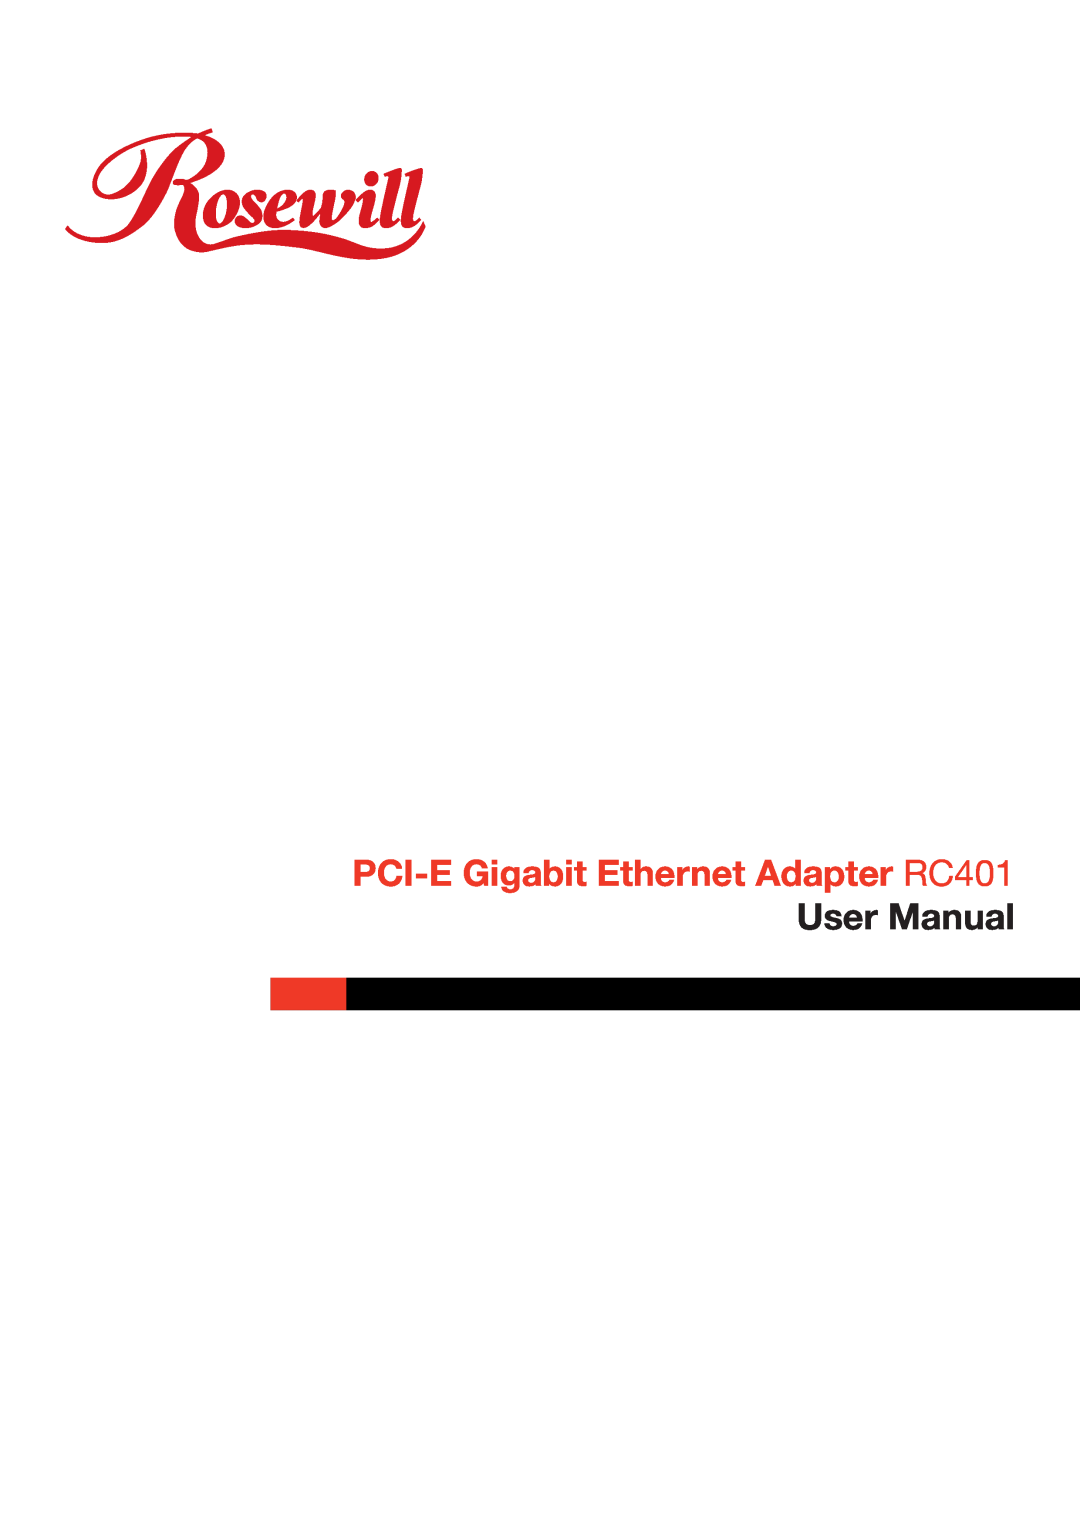 Rosewill RC-401 user manual PCI-E Gigabit Ethernet Adapter RC401, User Manual 